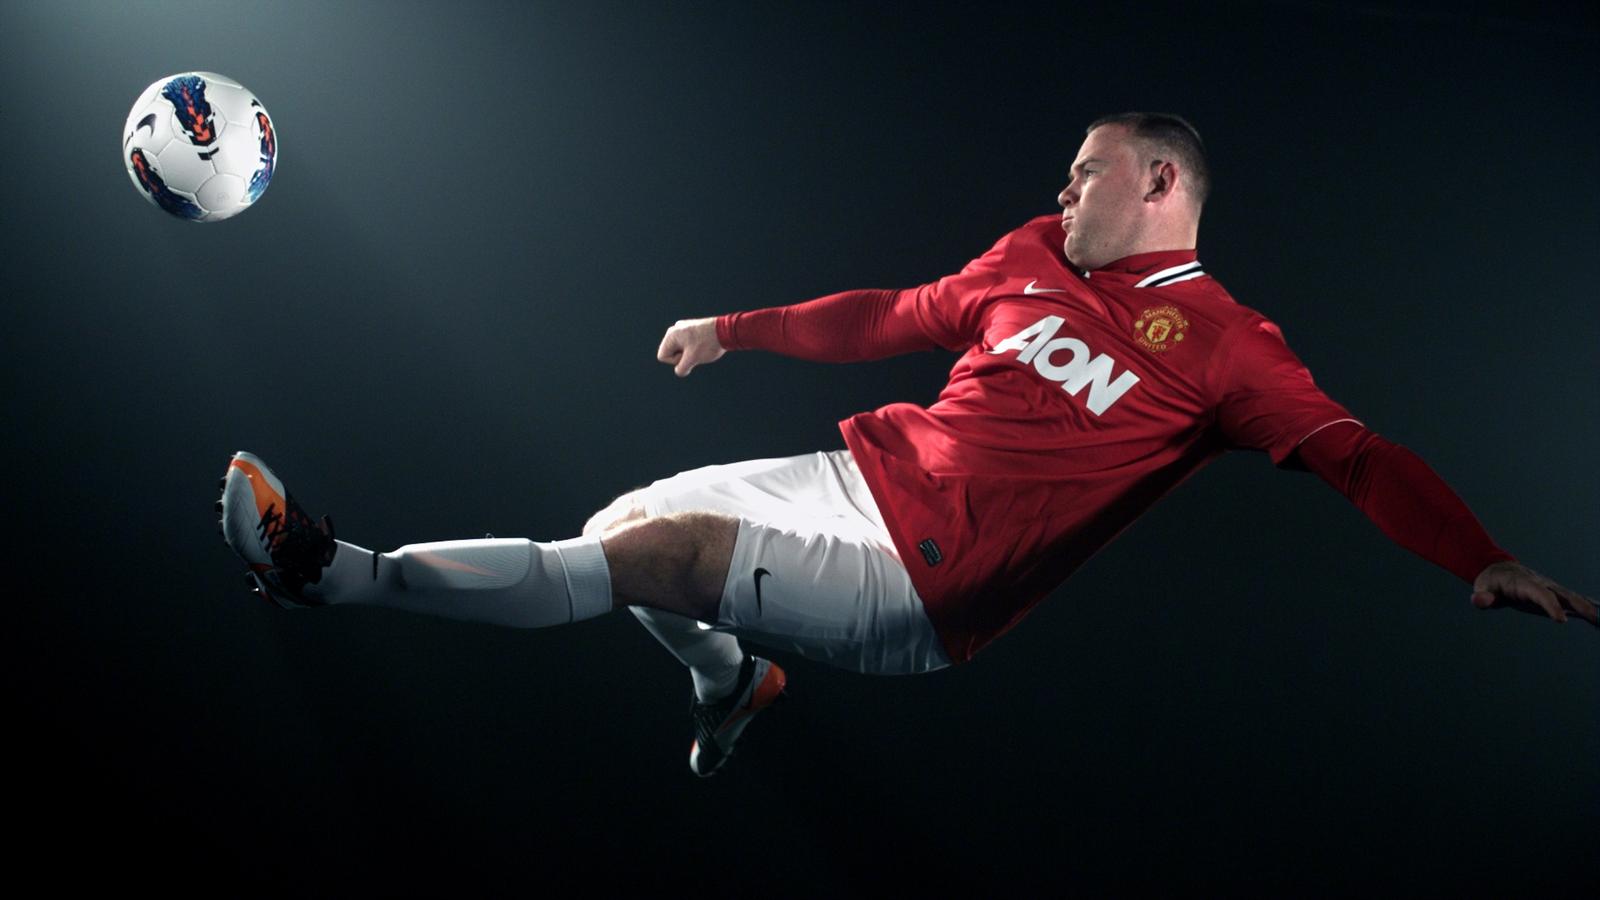 Wayne Rooney overhead kick in line for global award